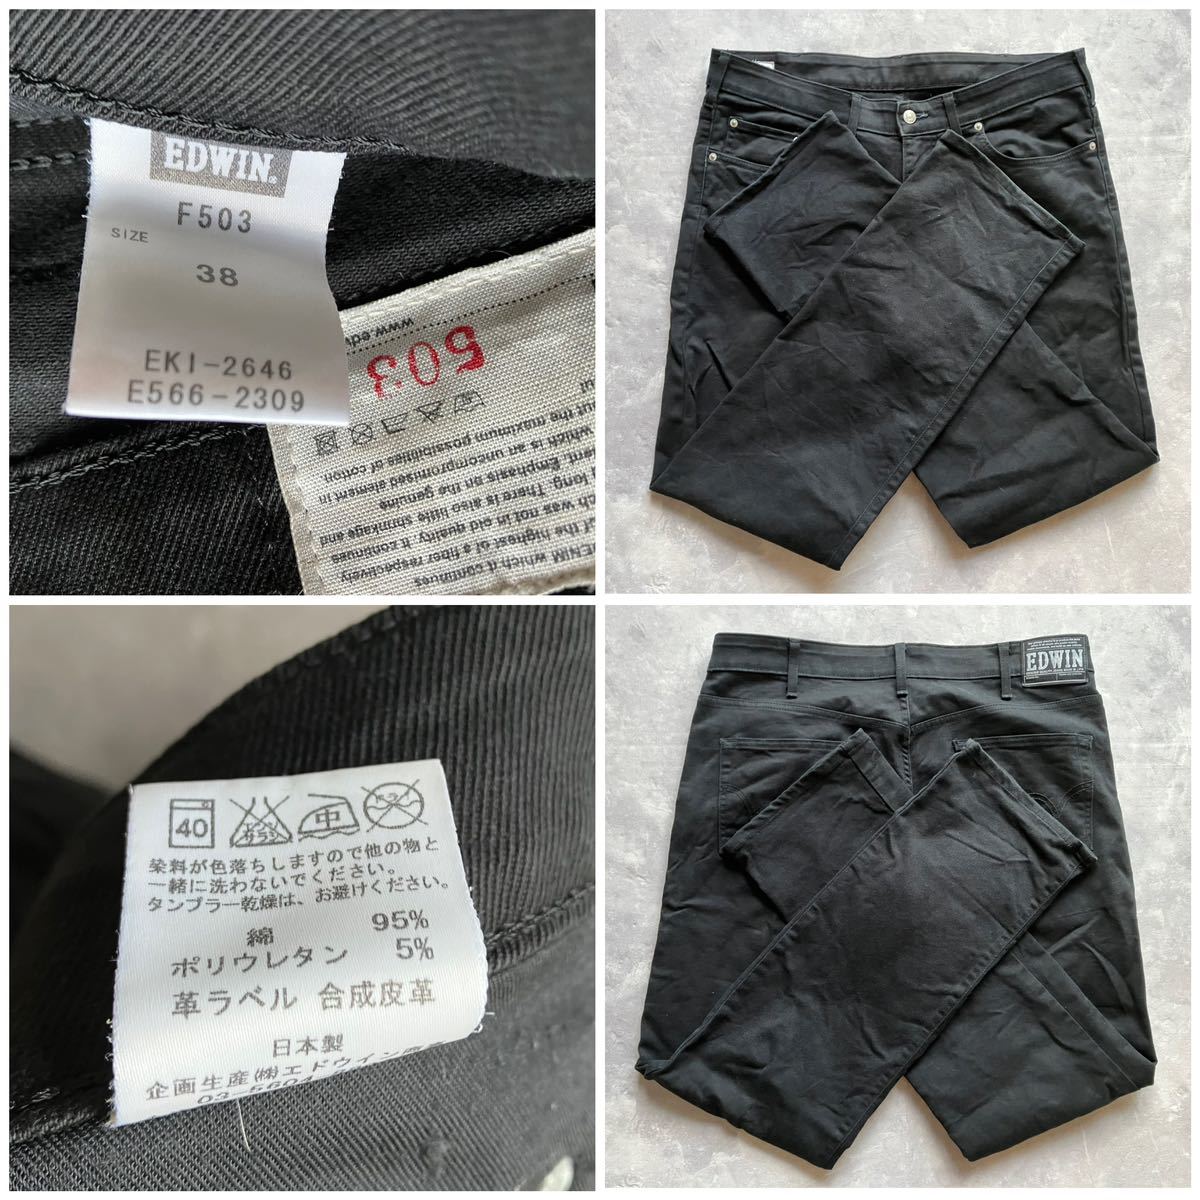  prompt decision W38 Edwin EDWIN F503 black black soft stretch strut made in Japan MADE IN JAPAN hem chain stitch specification largish size 